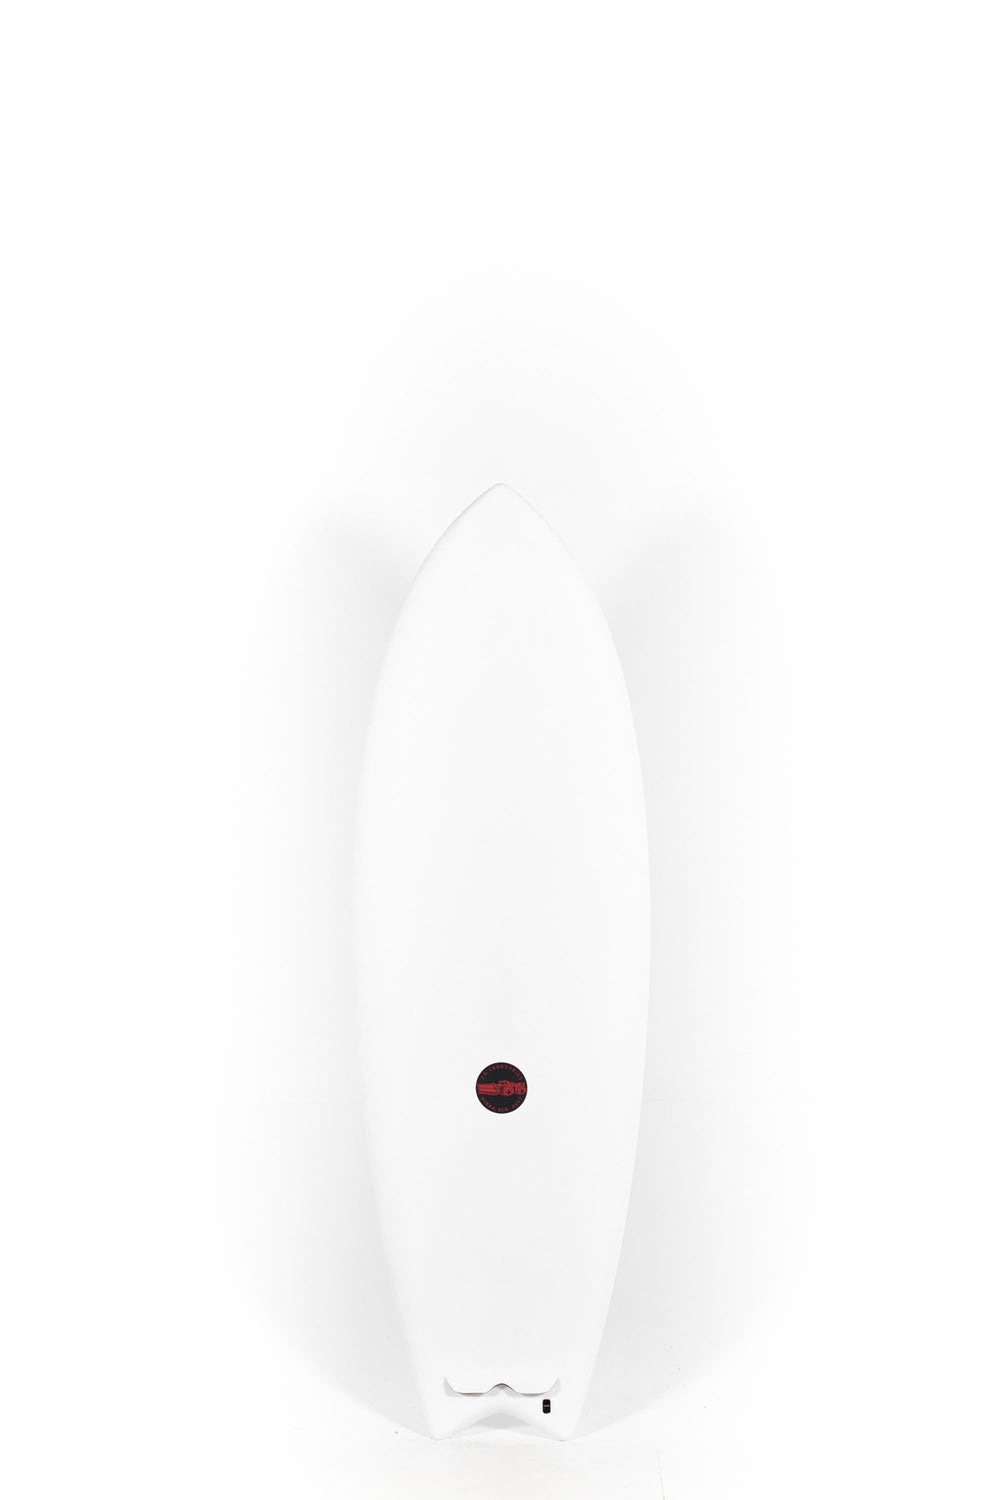 Pukas-Surf-Shop-JS-Surfboards-Red-Baron